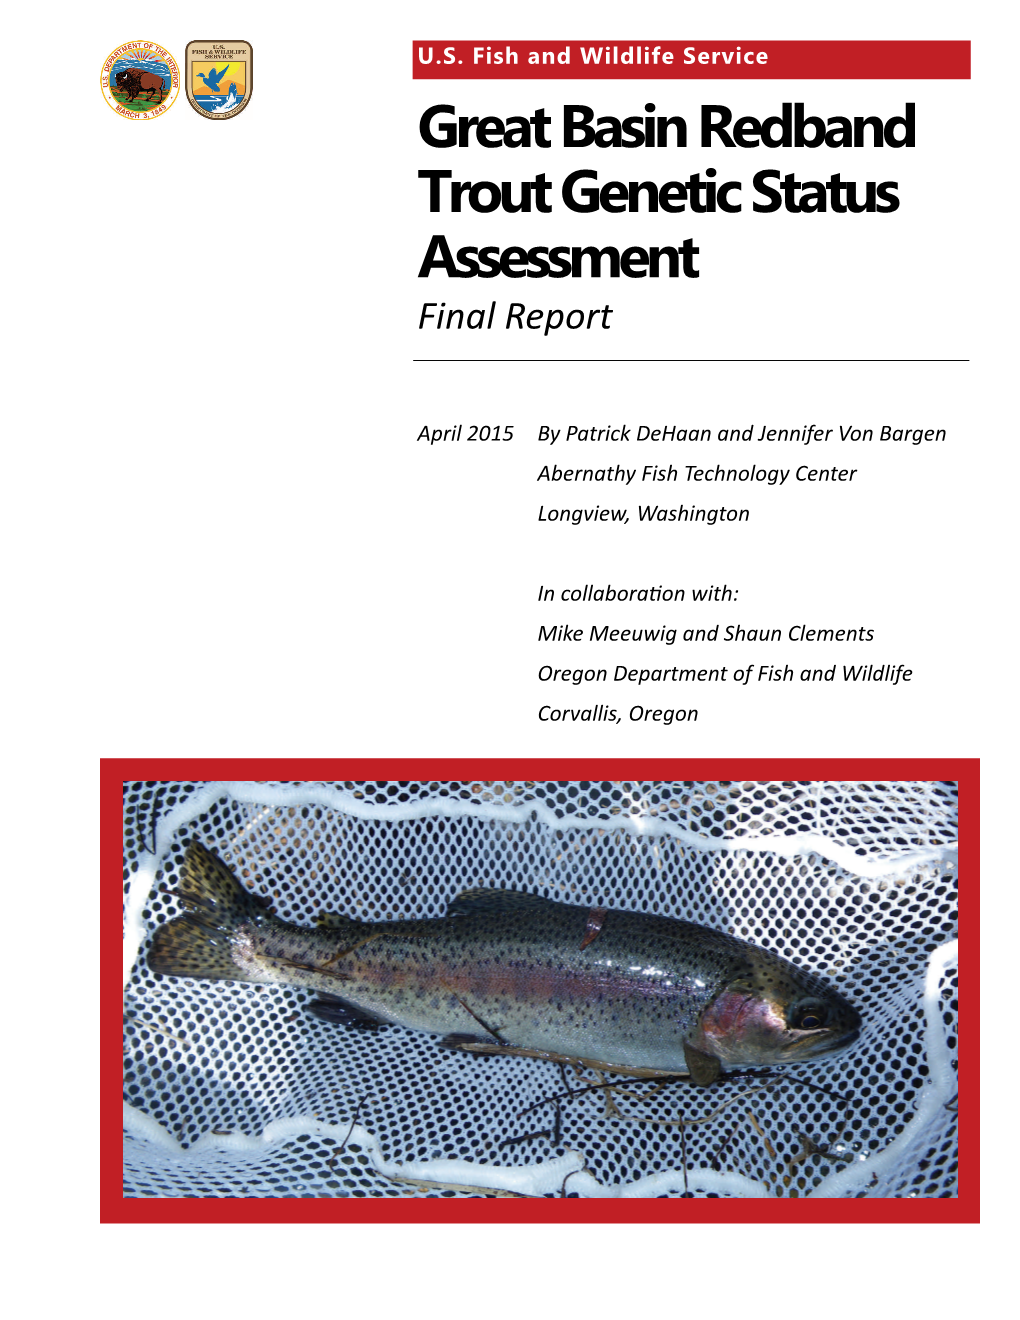 Great Basin Redband Trout Genetic Status Assessment Final Report